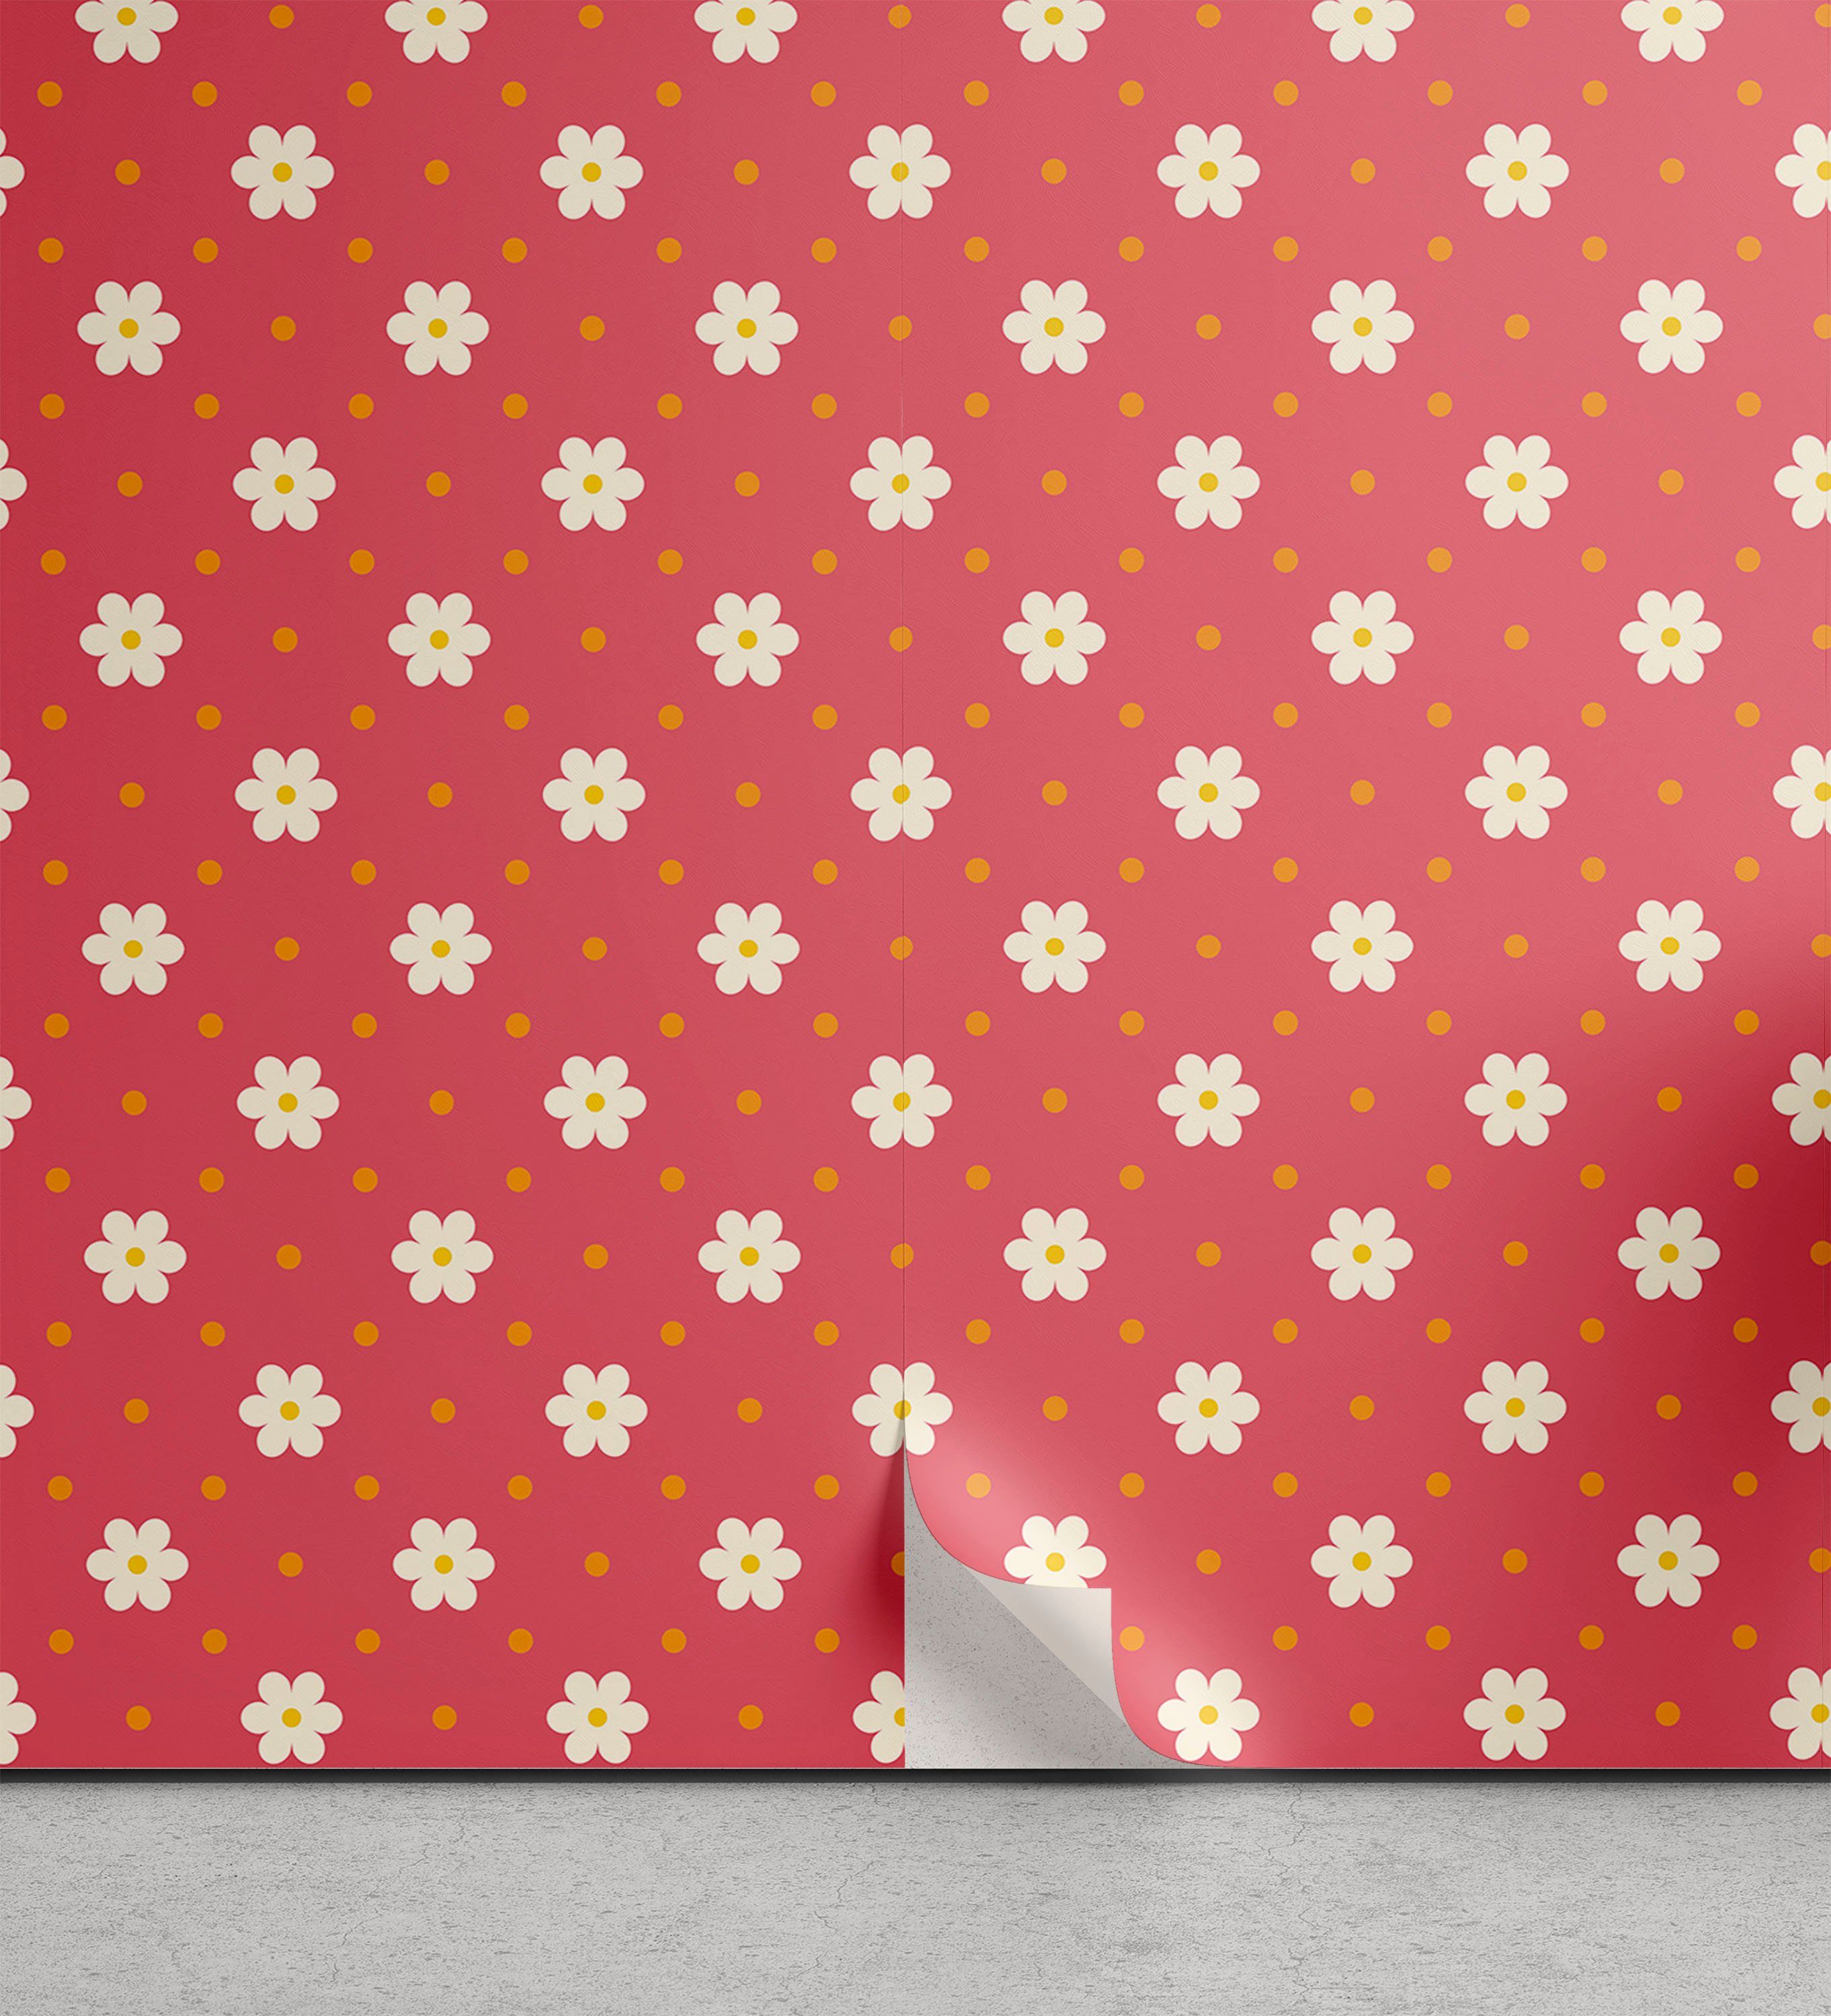 Abakuhaus Vinyltapete selbstklebendes Wohnzimmer Küchenakzent, Blumen Muster Daisy